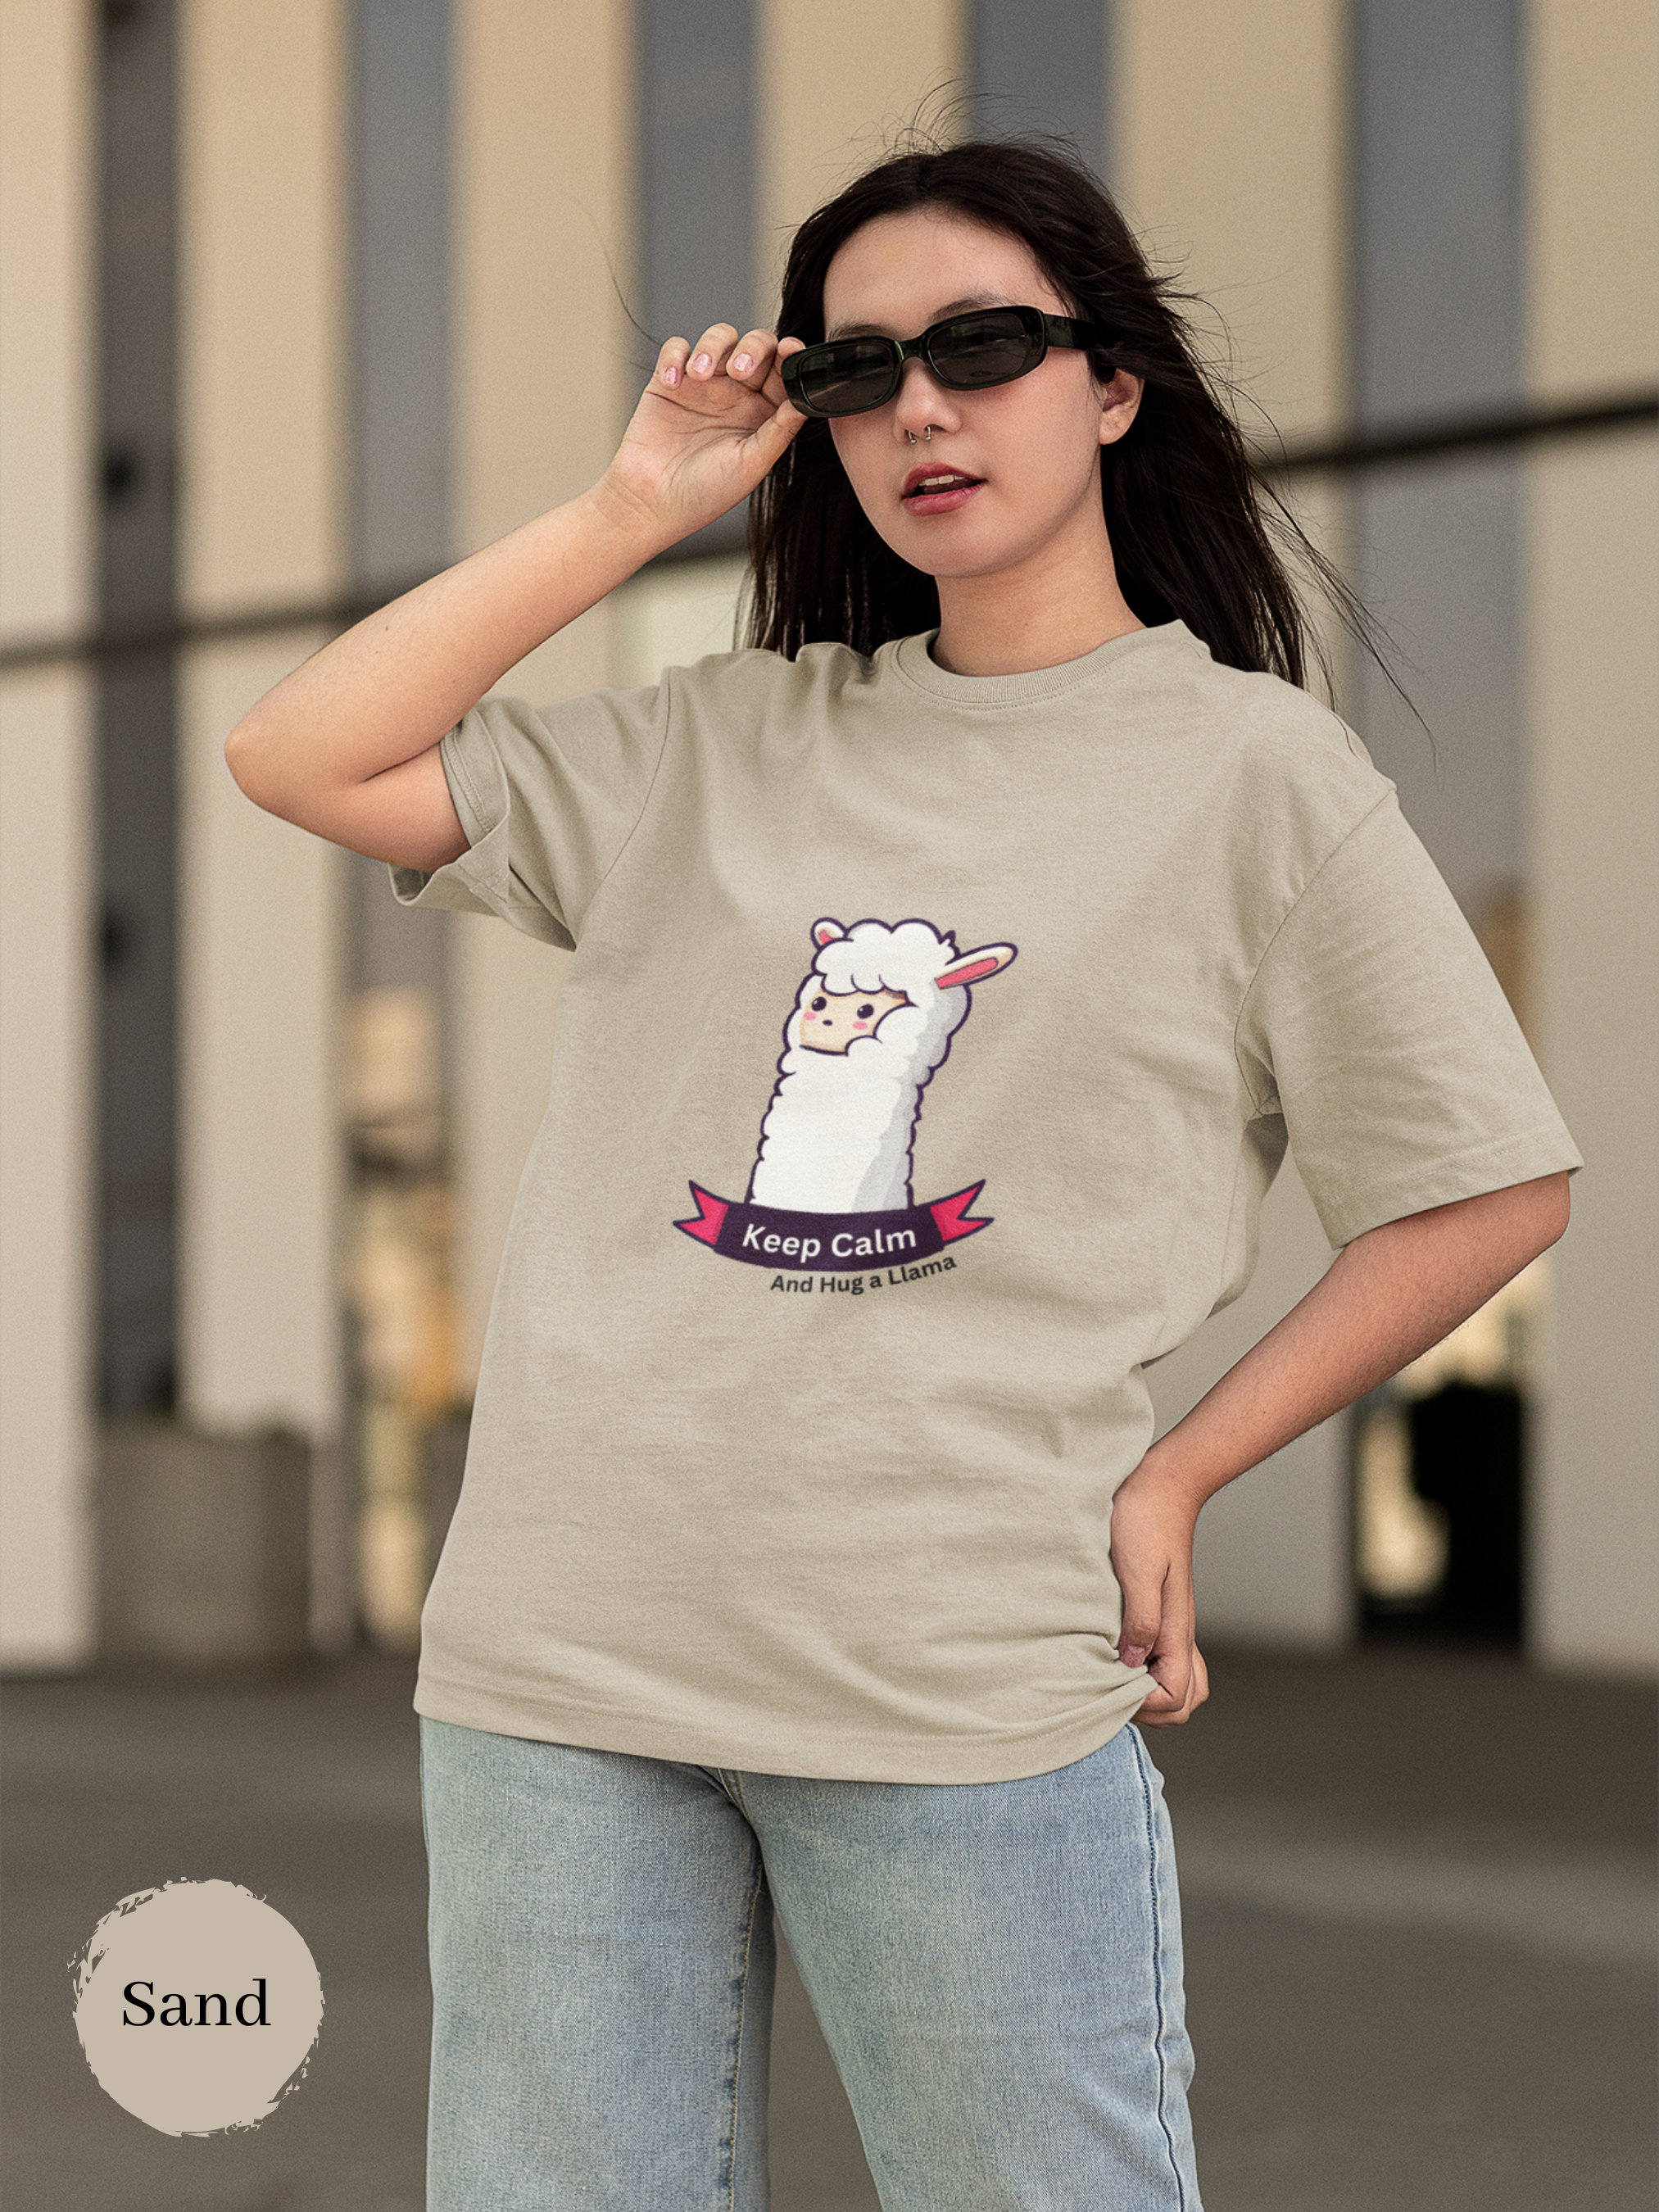 Ramen T-Shirt: Keep Calm and Hug A Llama - Japanese Foodie Shirt with Ramen Art